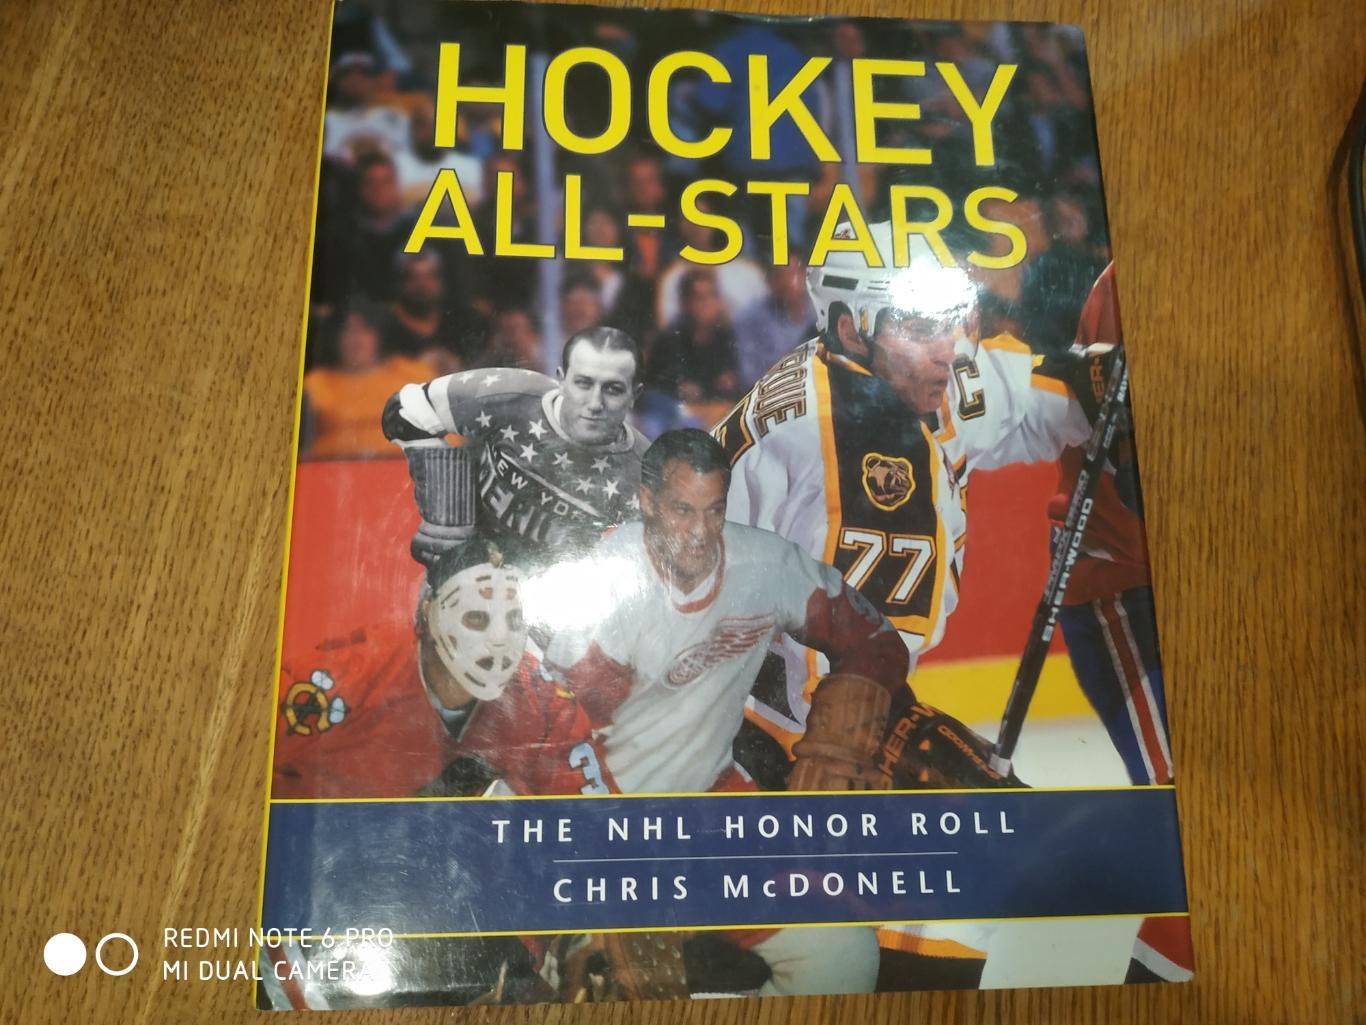 КНИГА СПРАВОЧНИК 2000 HOCKEY ALL-STARS THE NHL HONOR ROLL CHRIS McDONELL FIREFLY 7